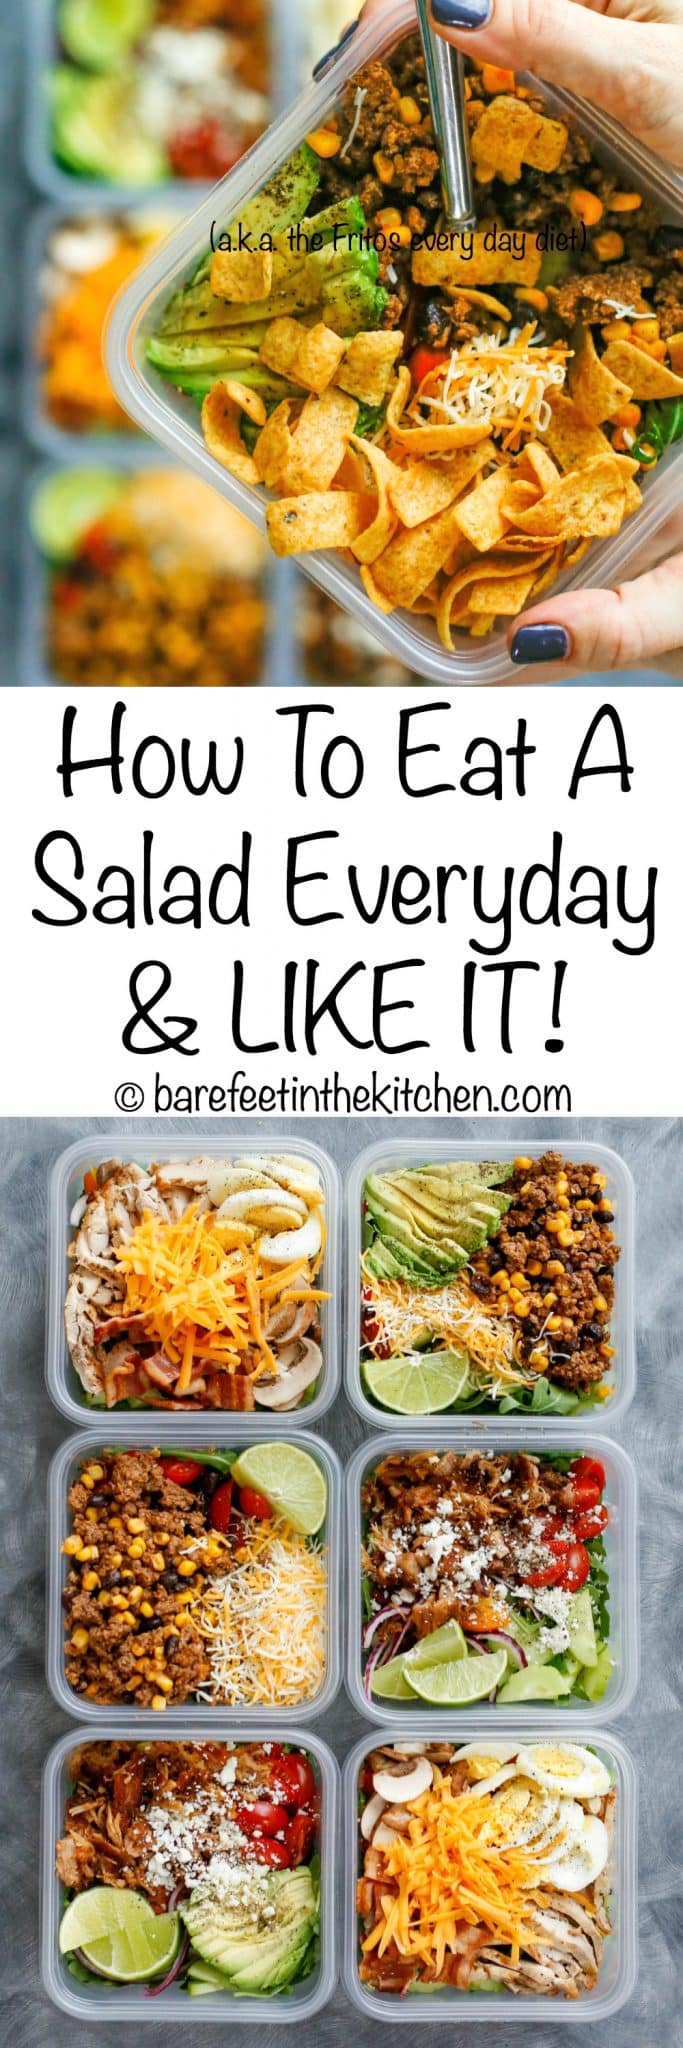 https://barefeetinthekitchen.com/wp-content/uploads/2017/12/Salad-Everyday-long-pin.jpg